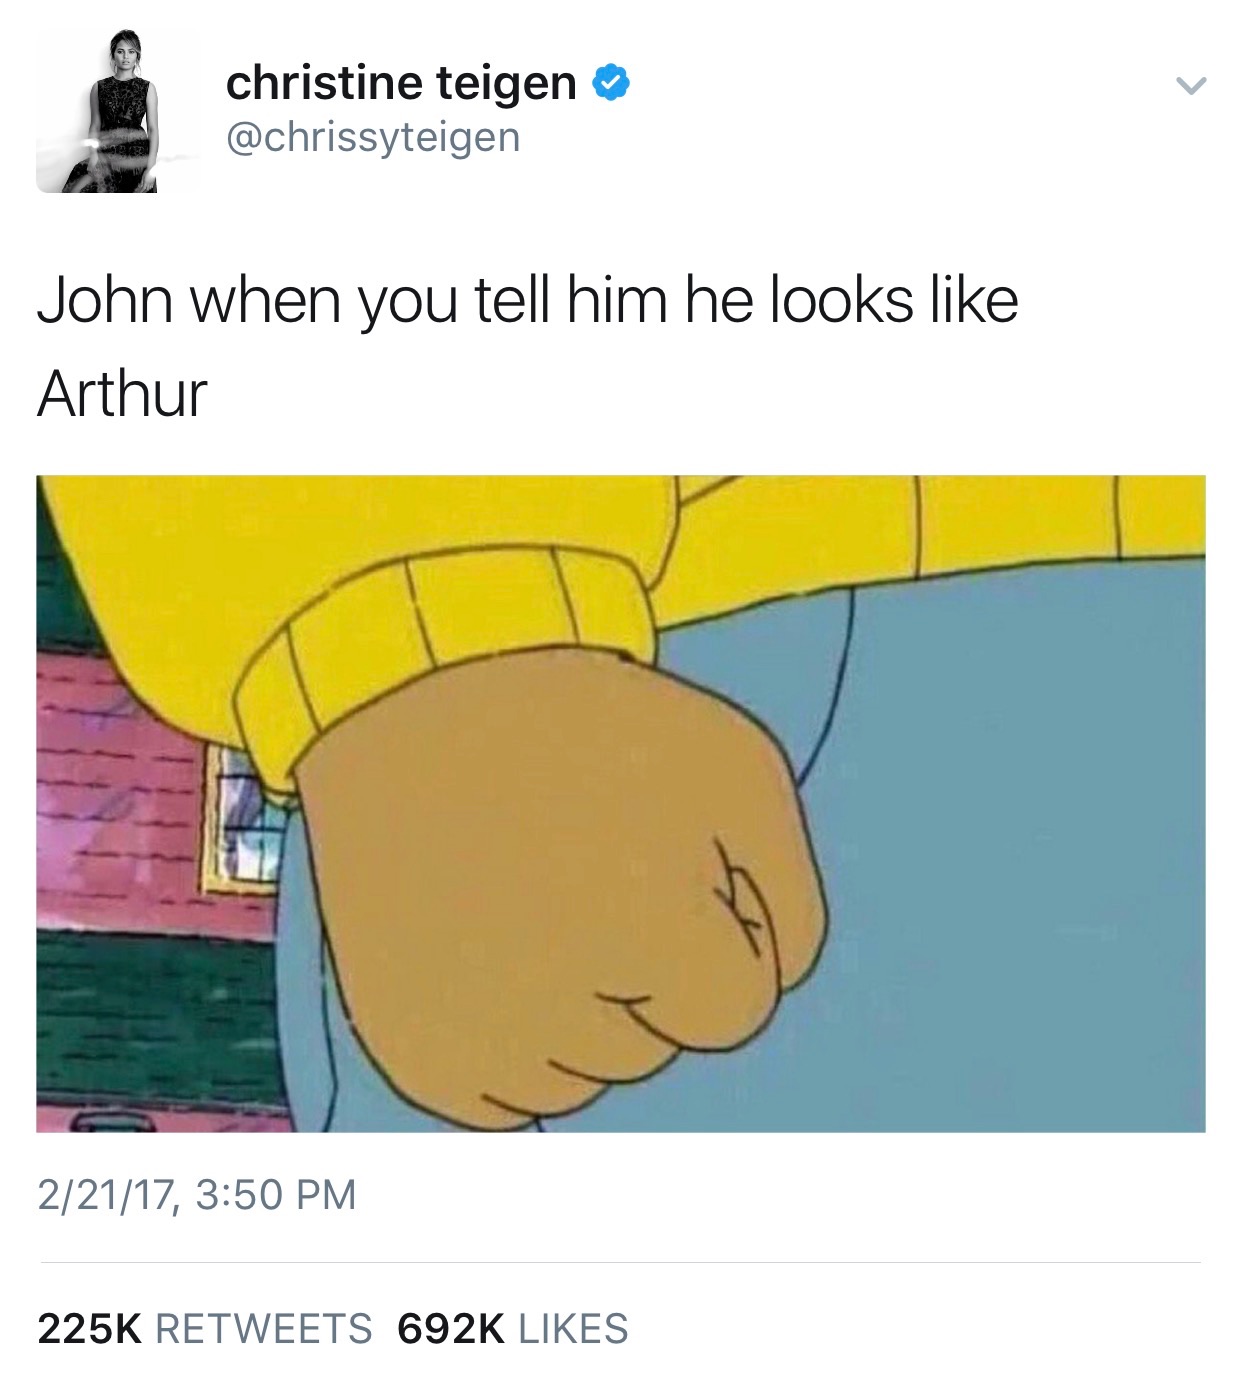 you tell john he looks like arthur - christine teigen John when you tell him he looks Arthur 22117,